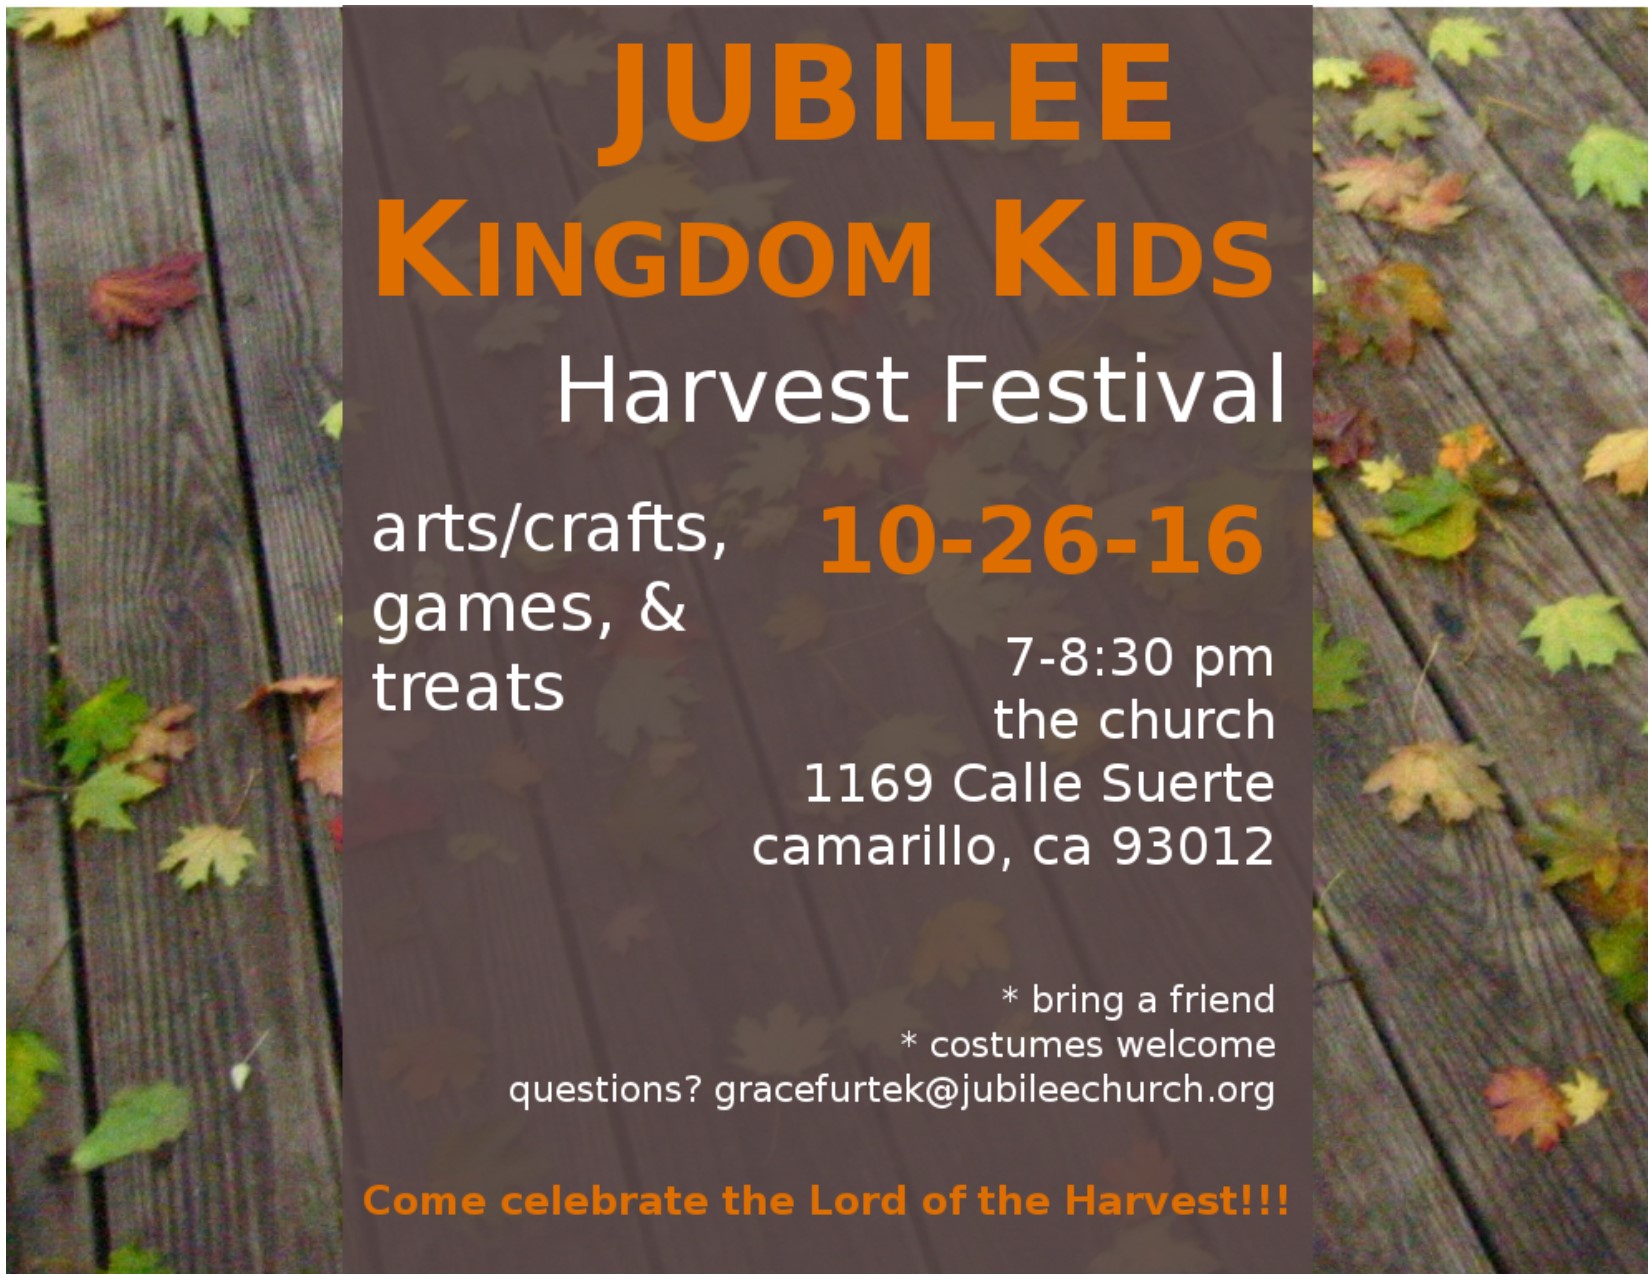 Jubilee Kingdom Kids Harvest Festival